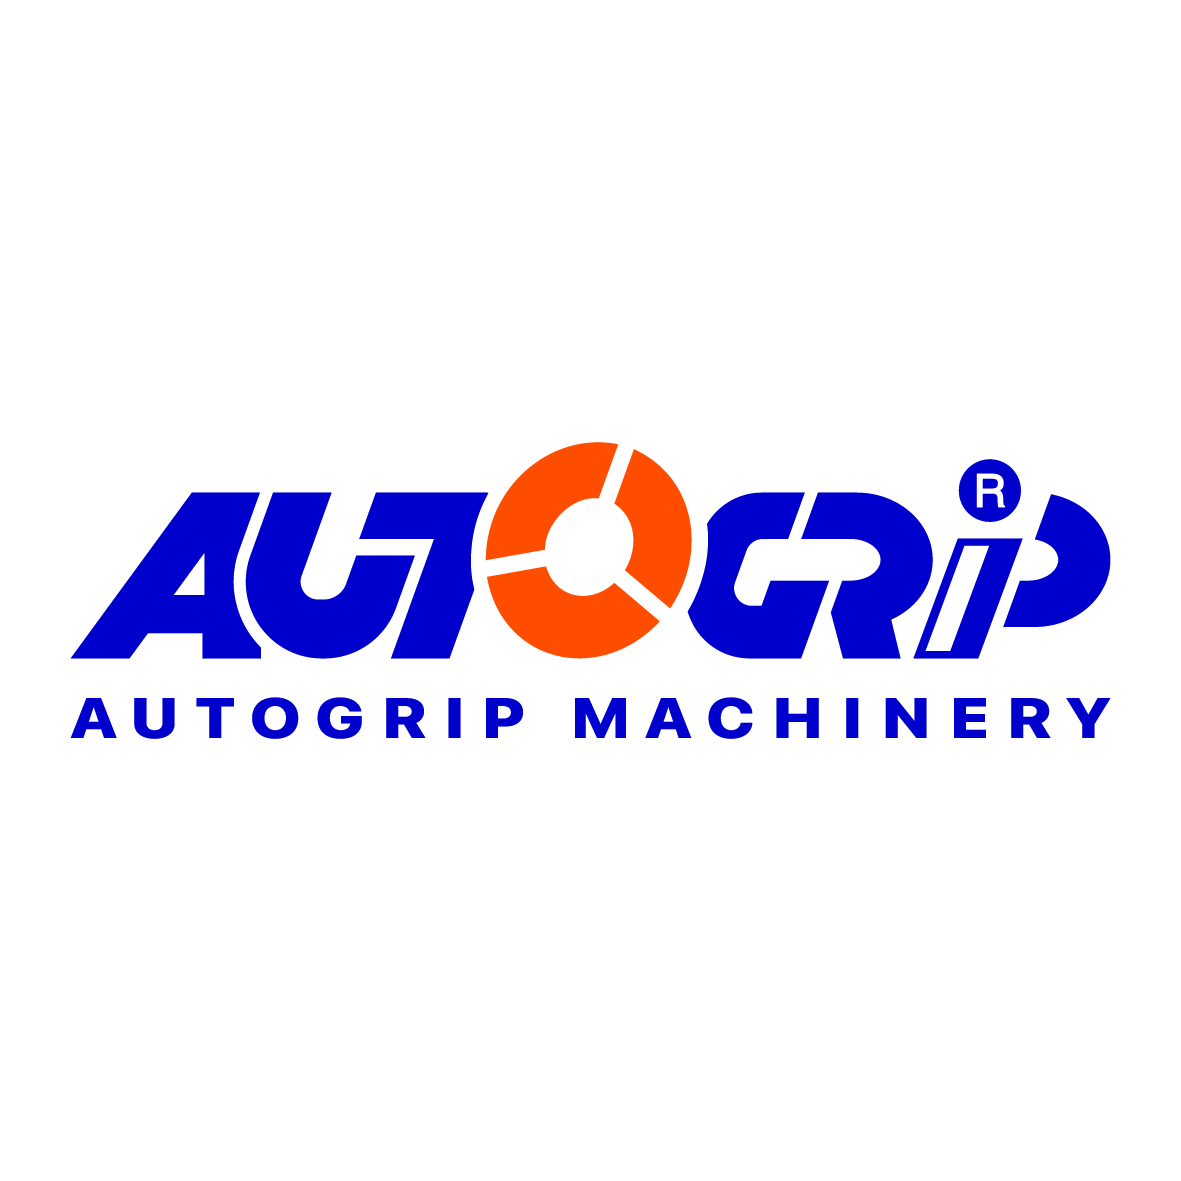 AUTOGRIP Machinery